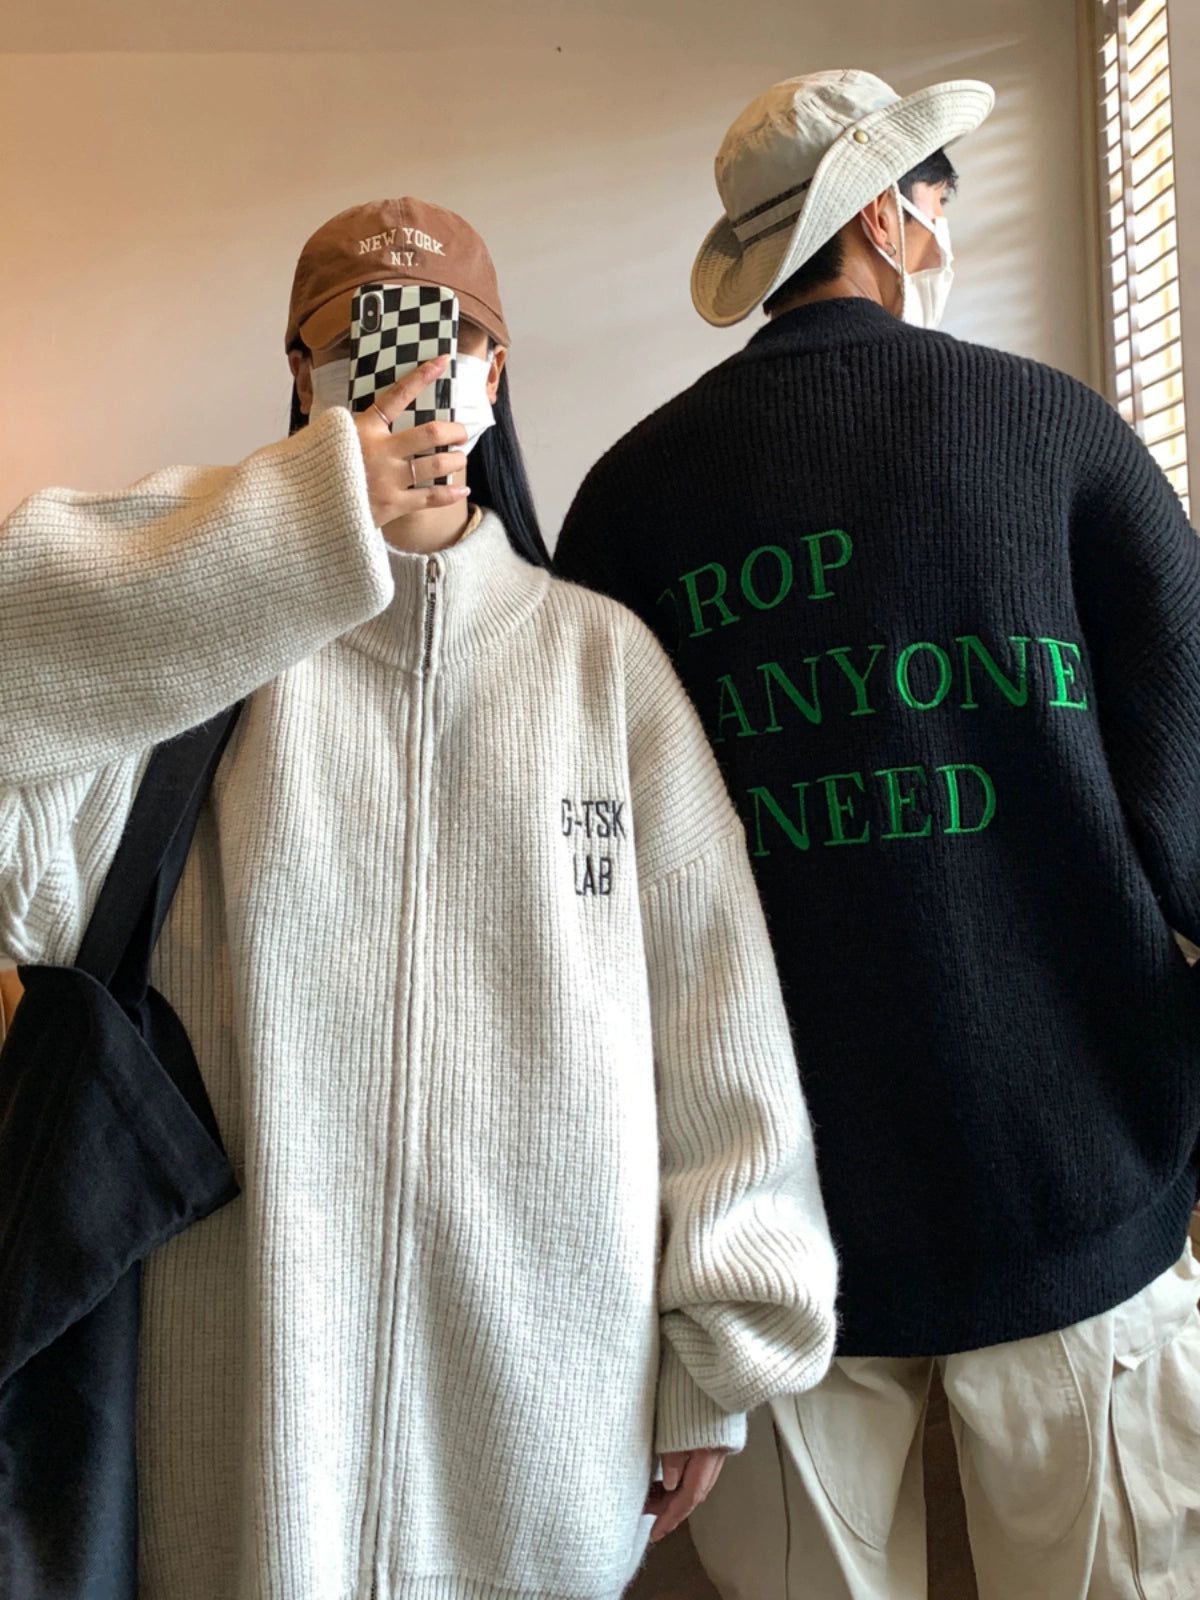 jpq "Drop Anyone" Knit Jacket